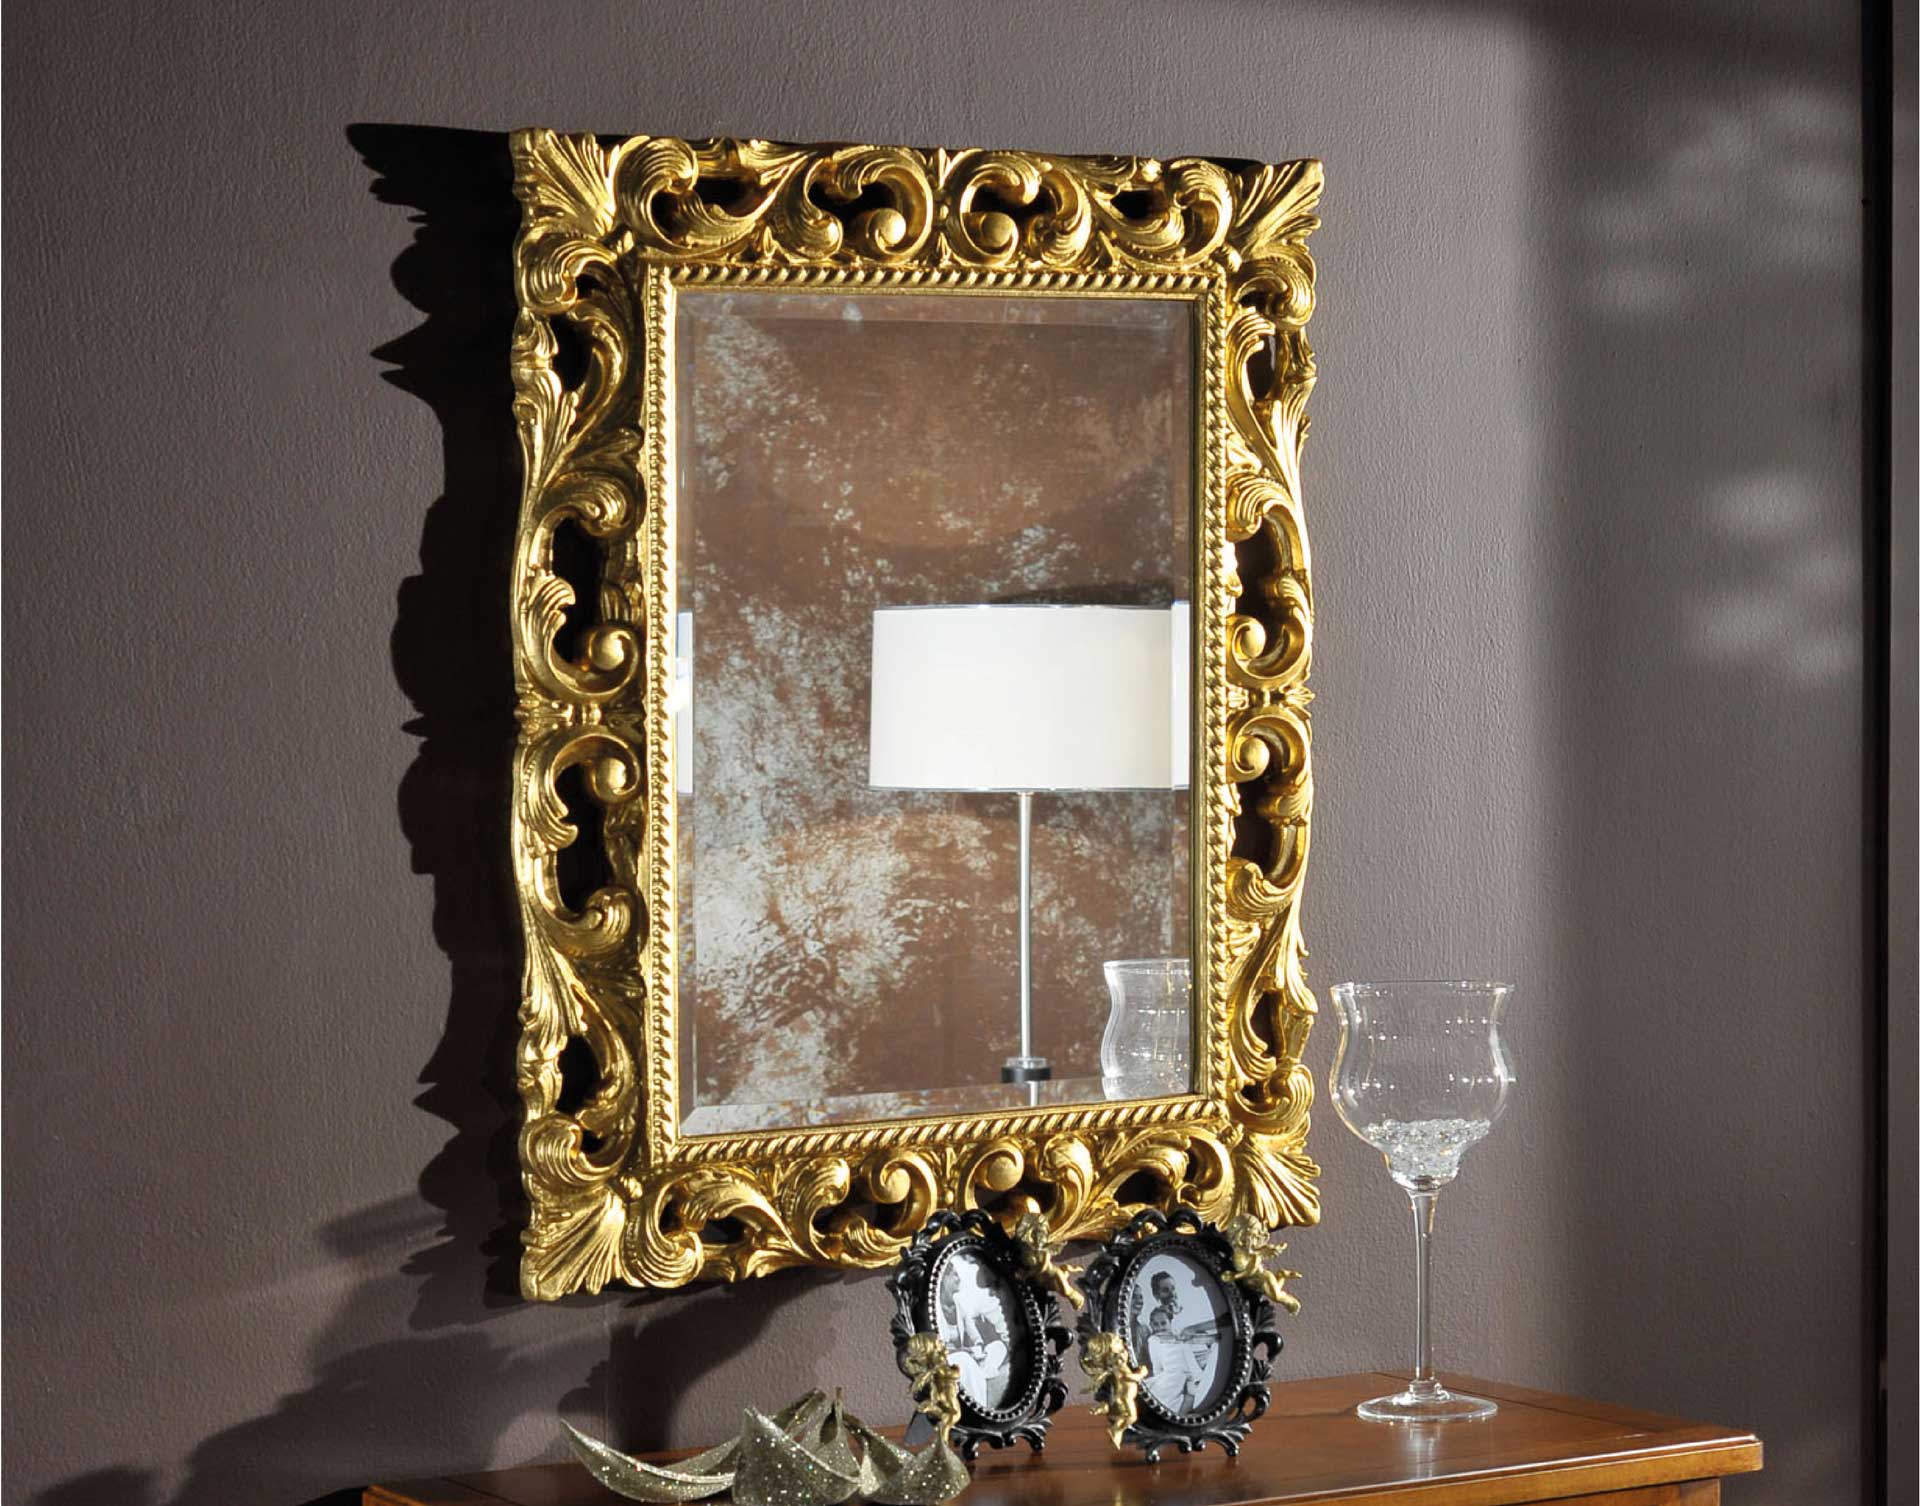 Barockspiegel Modell Ulm, helles Blattgold, an der Wand